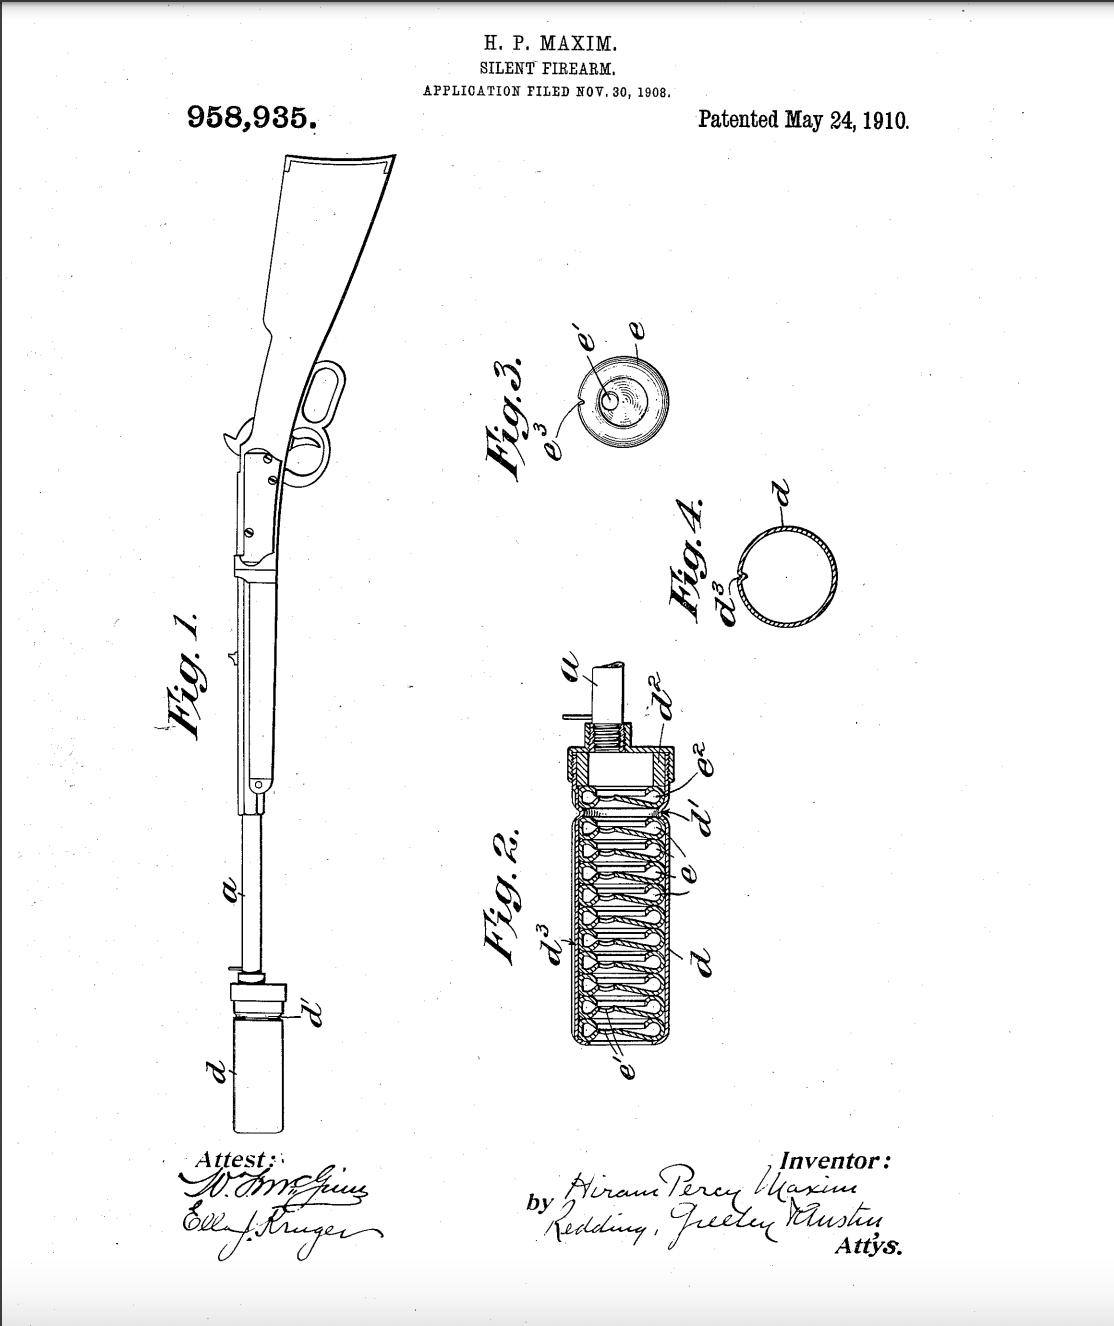 Hiram Percy Maxim's patent for a "silent firearm"